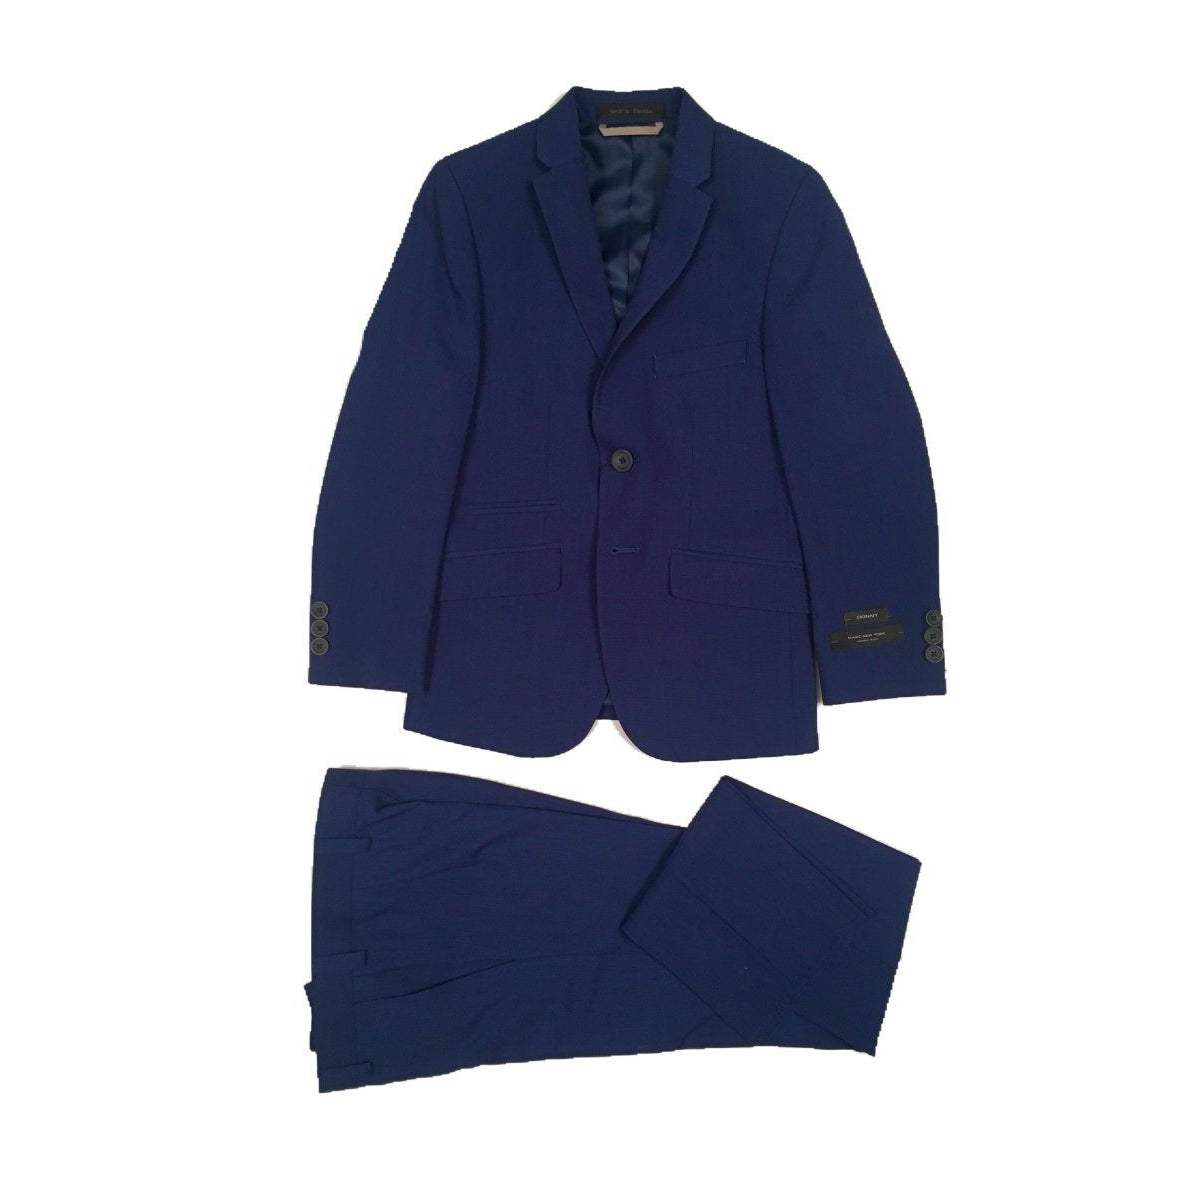 Marc New York Boys Husky Blue Plaid Suit WH574 Suits (Boys) Marc New York 